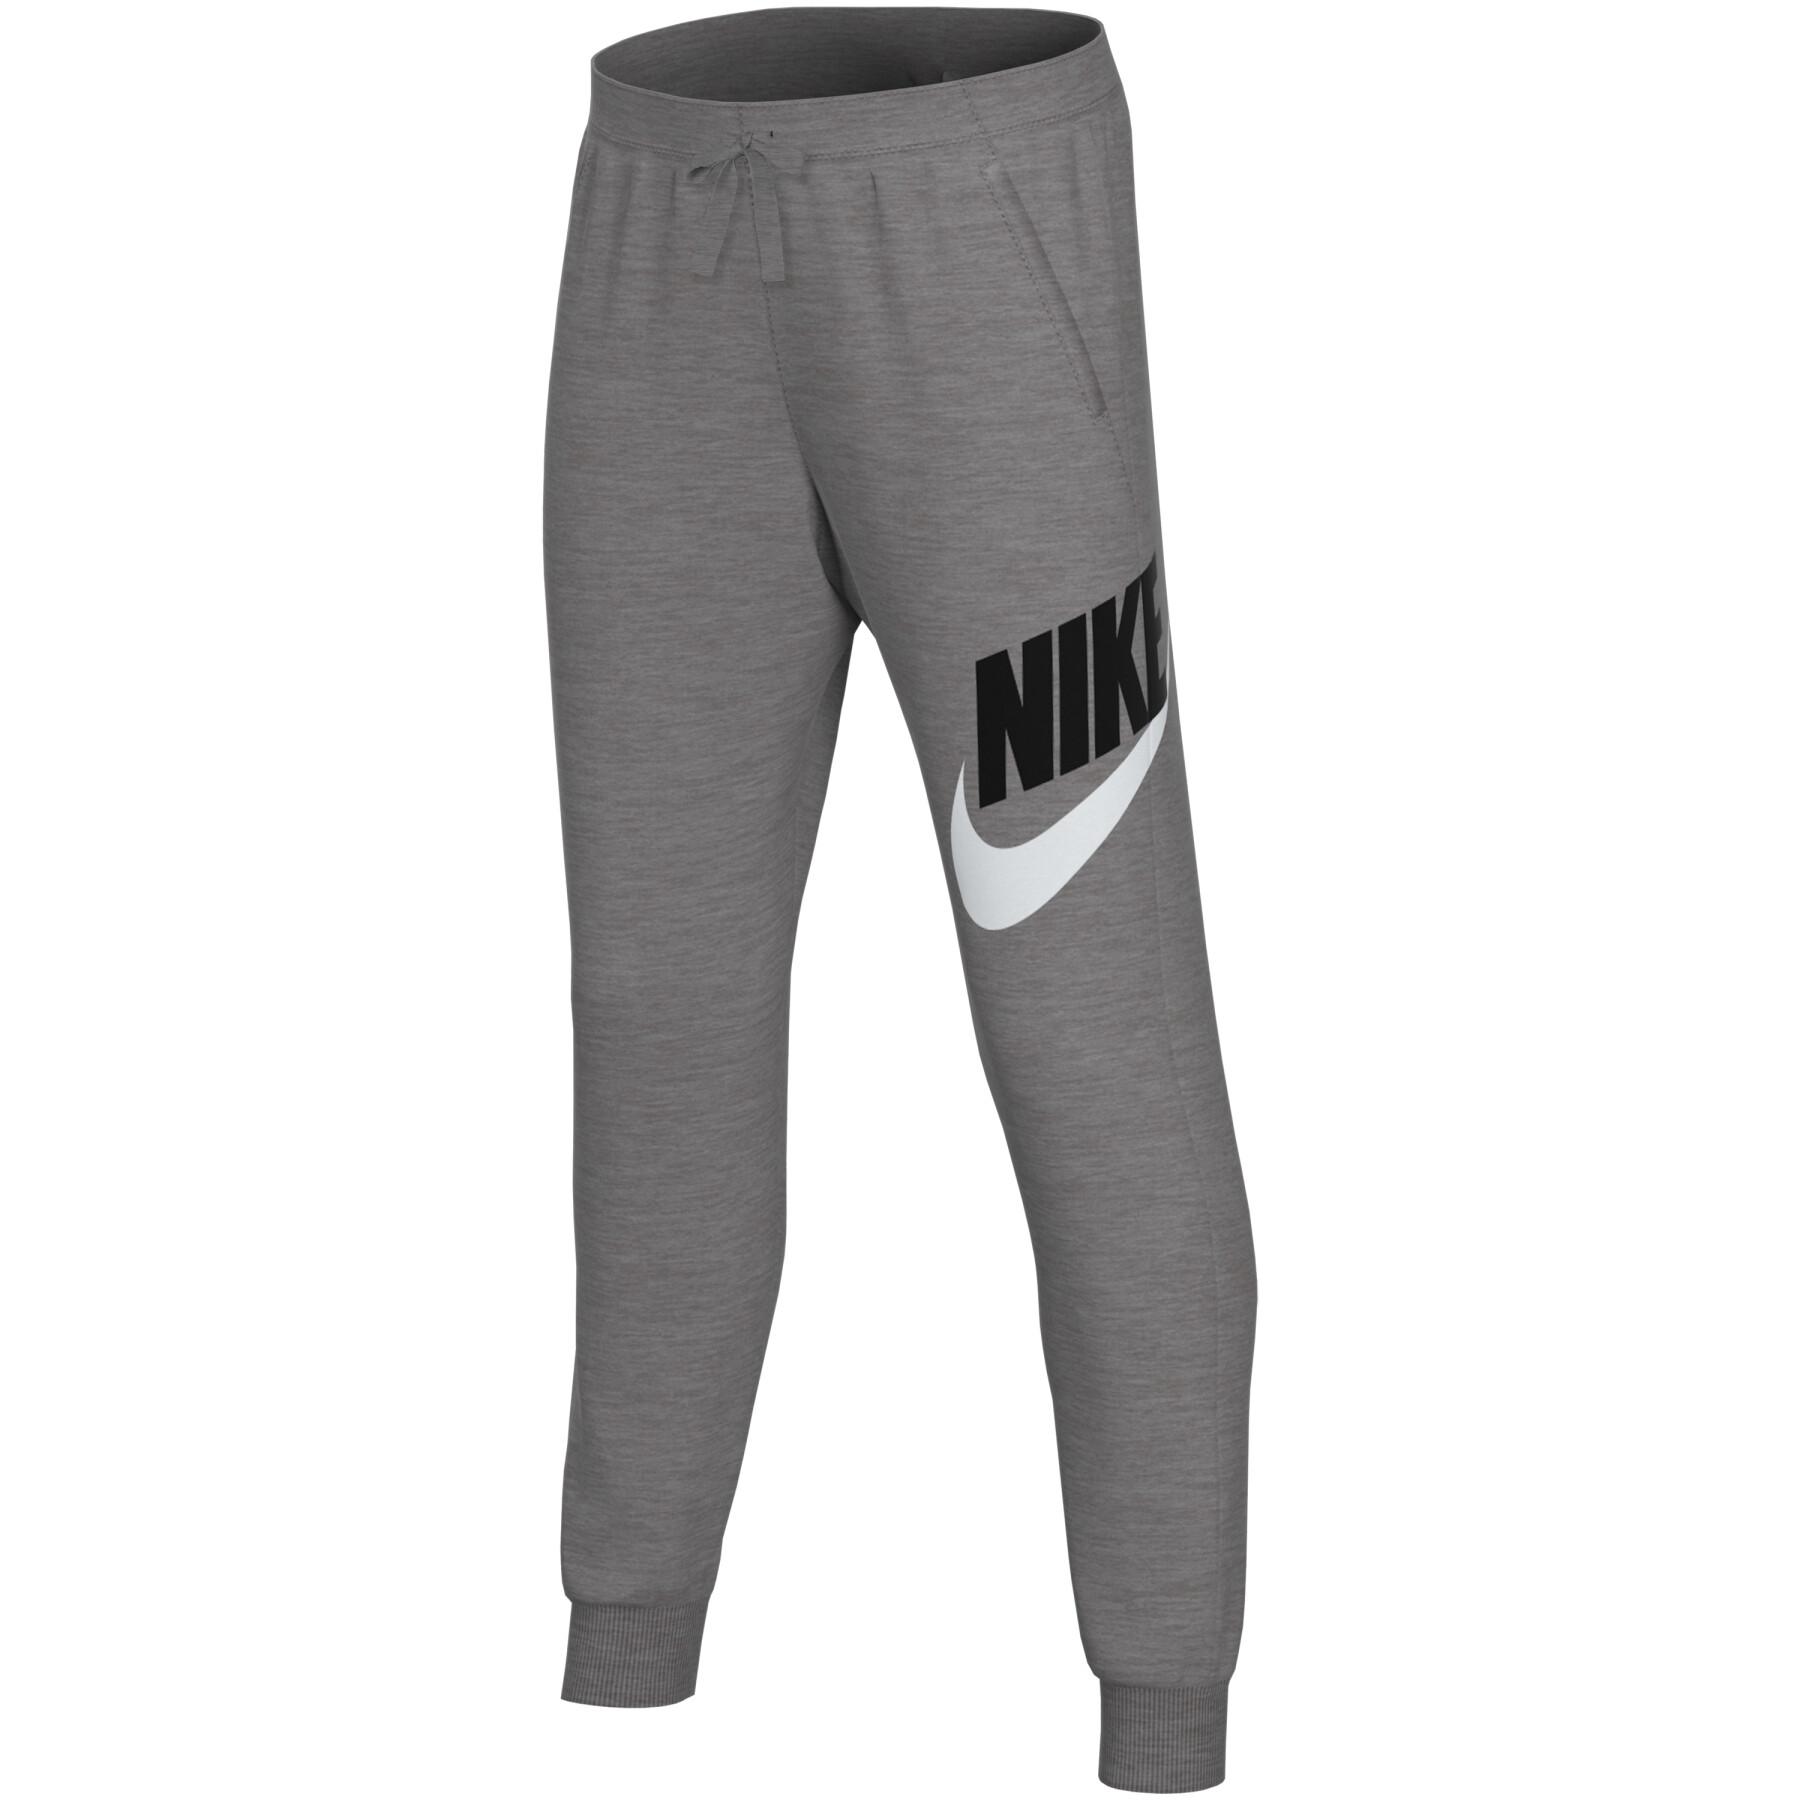 Jogginghosen Jogginganzug Lifestyle Kinder - - - Sportswear Kinderbekleidung Fleece Nike für Club